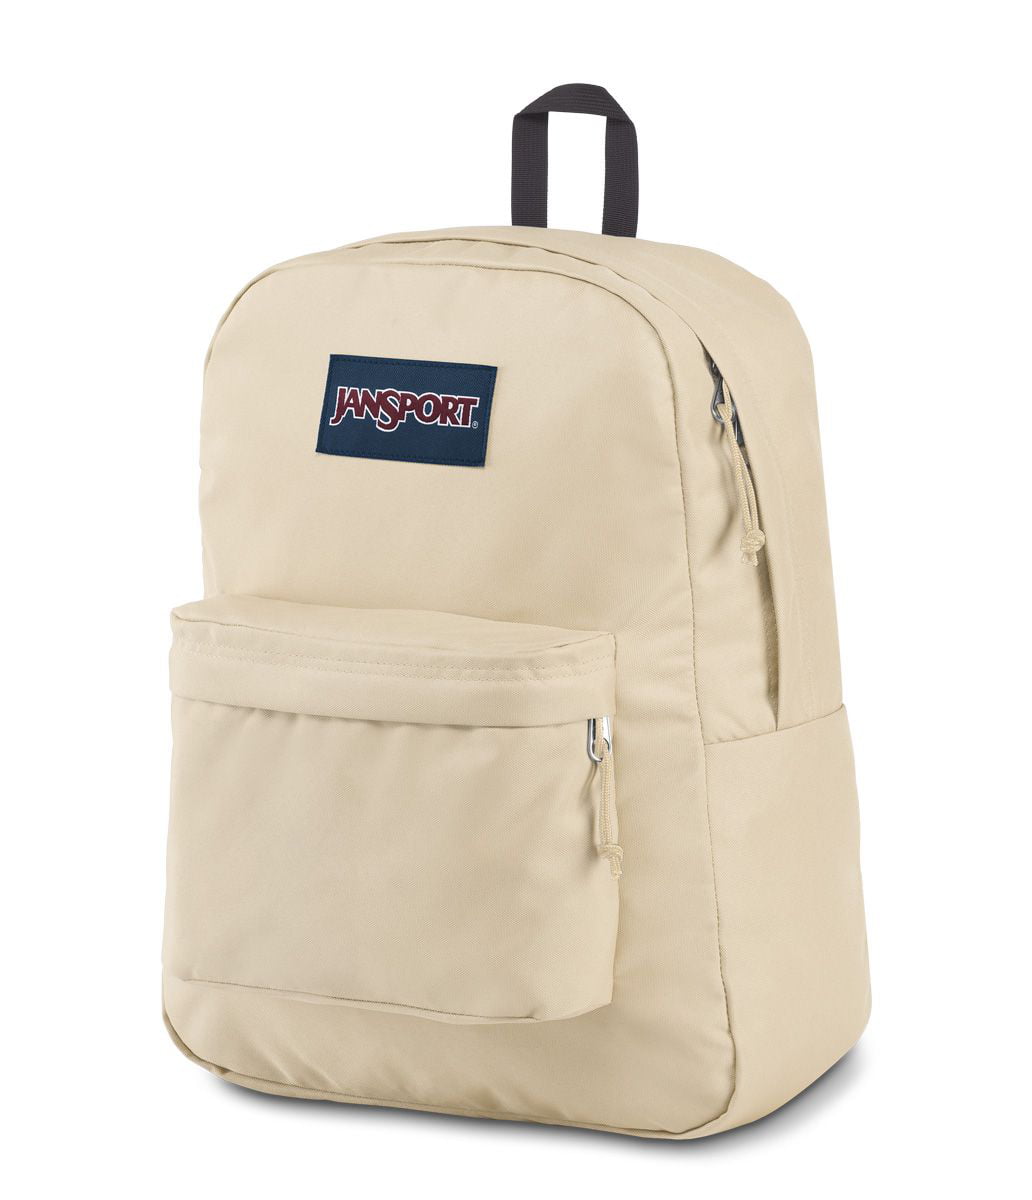 jansport cream backpack